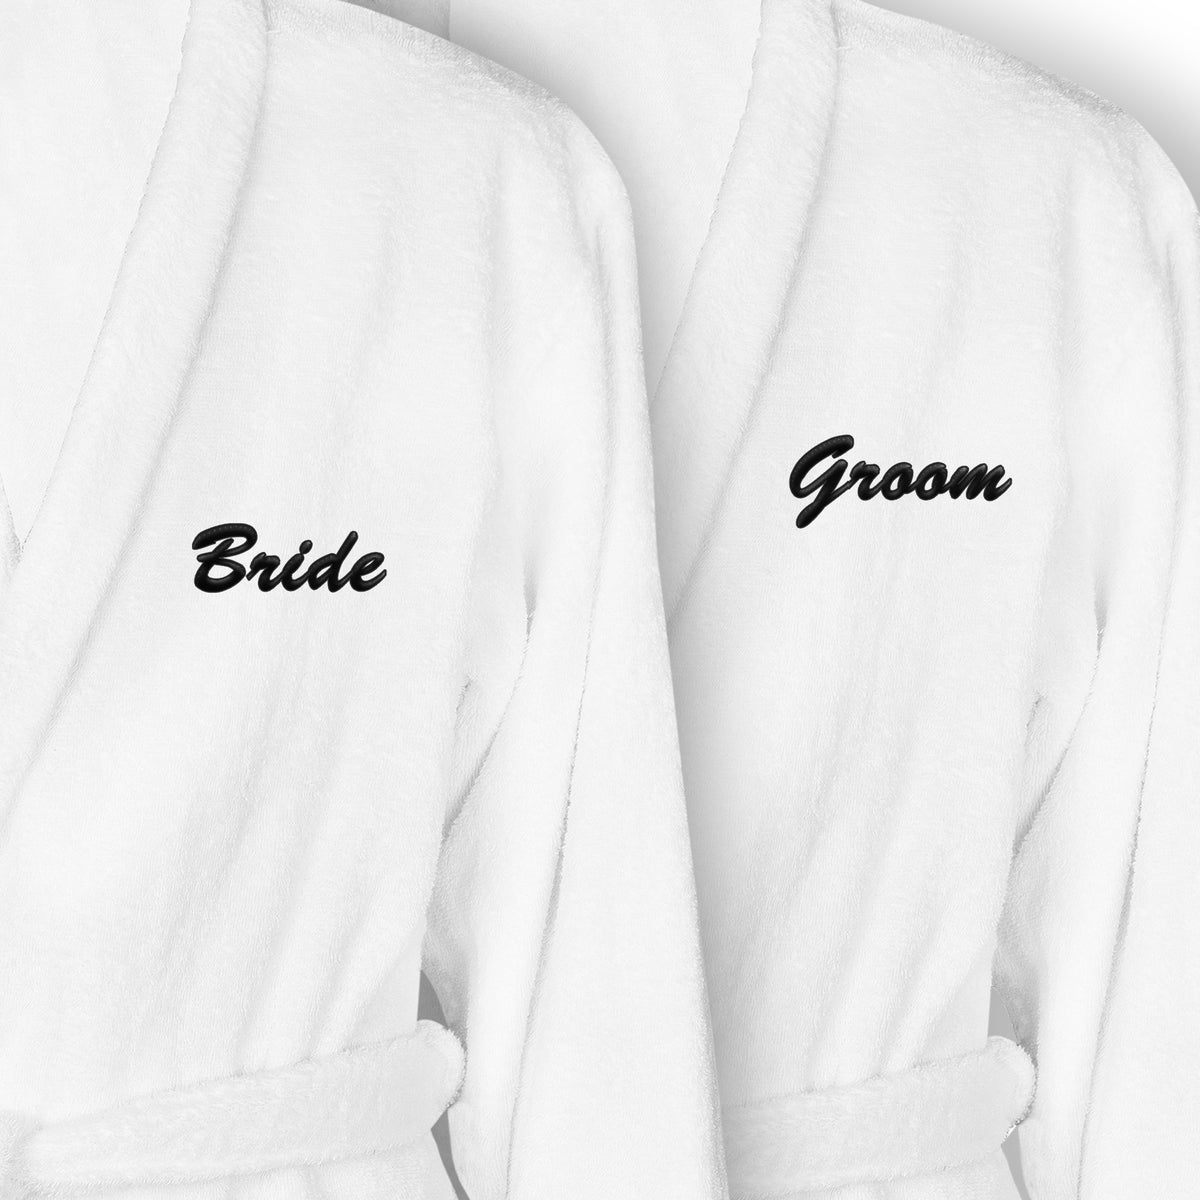 Custom Bathrobe Set for Couple, 2 Pieces Couple's Cotton Bath Robe, 100% Cotton